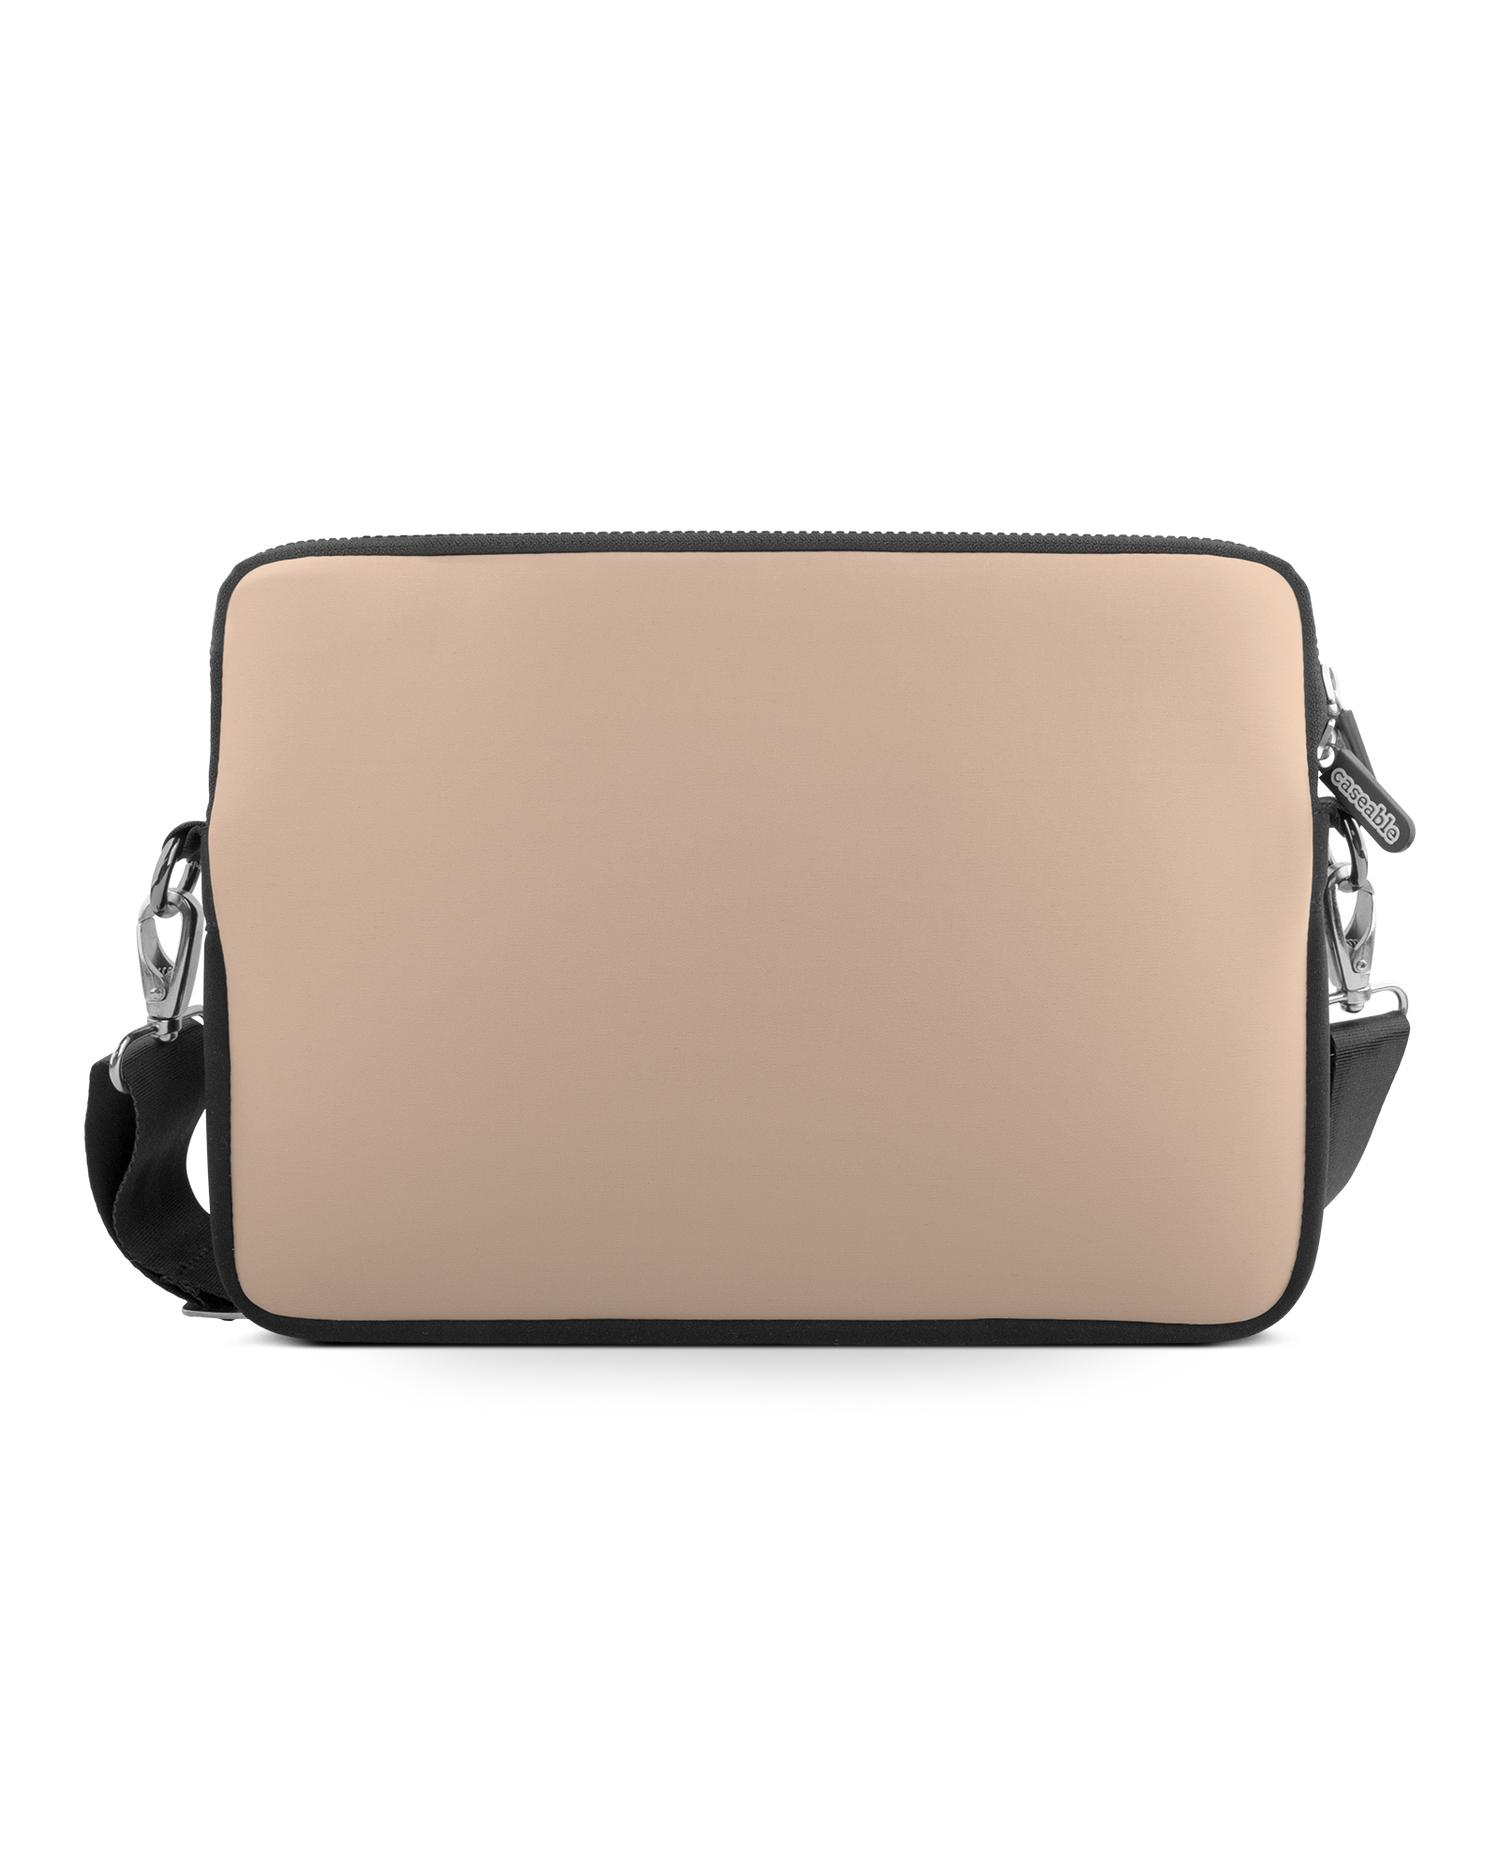 PEACH Premium Laptop Bag 13 inch: Front View